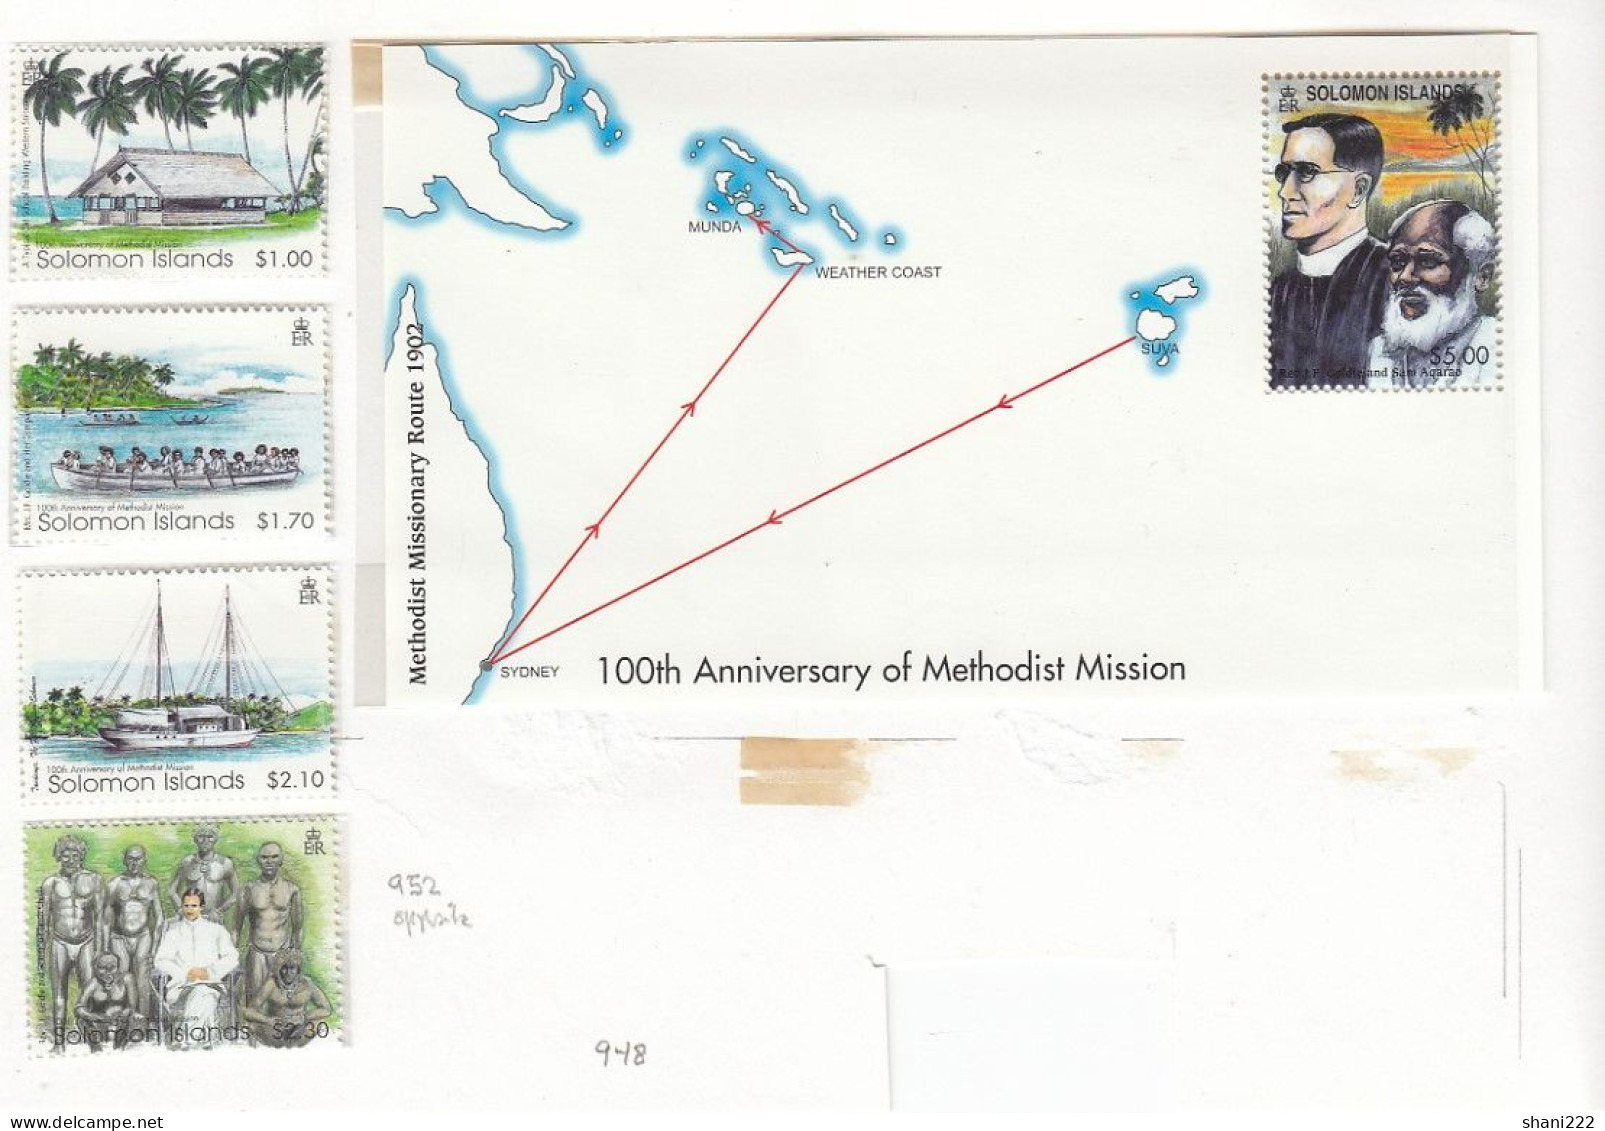 Solomomn Islands - Methodist Mission Anniversary (80-109) - Solomon Islands